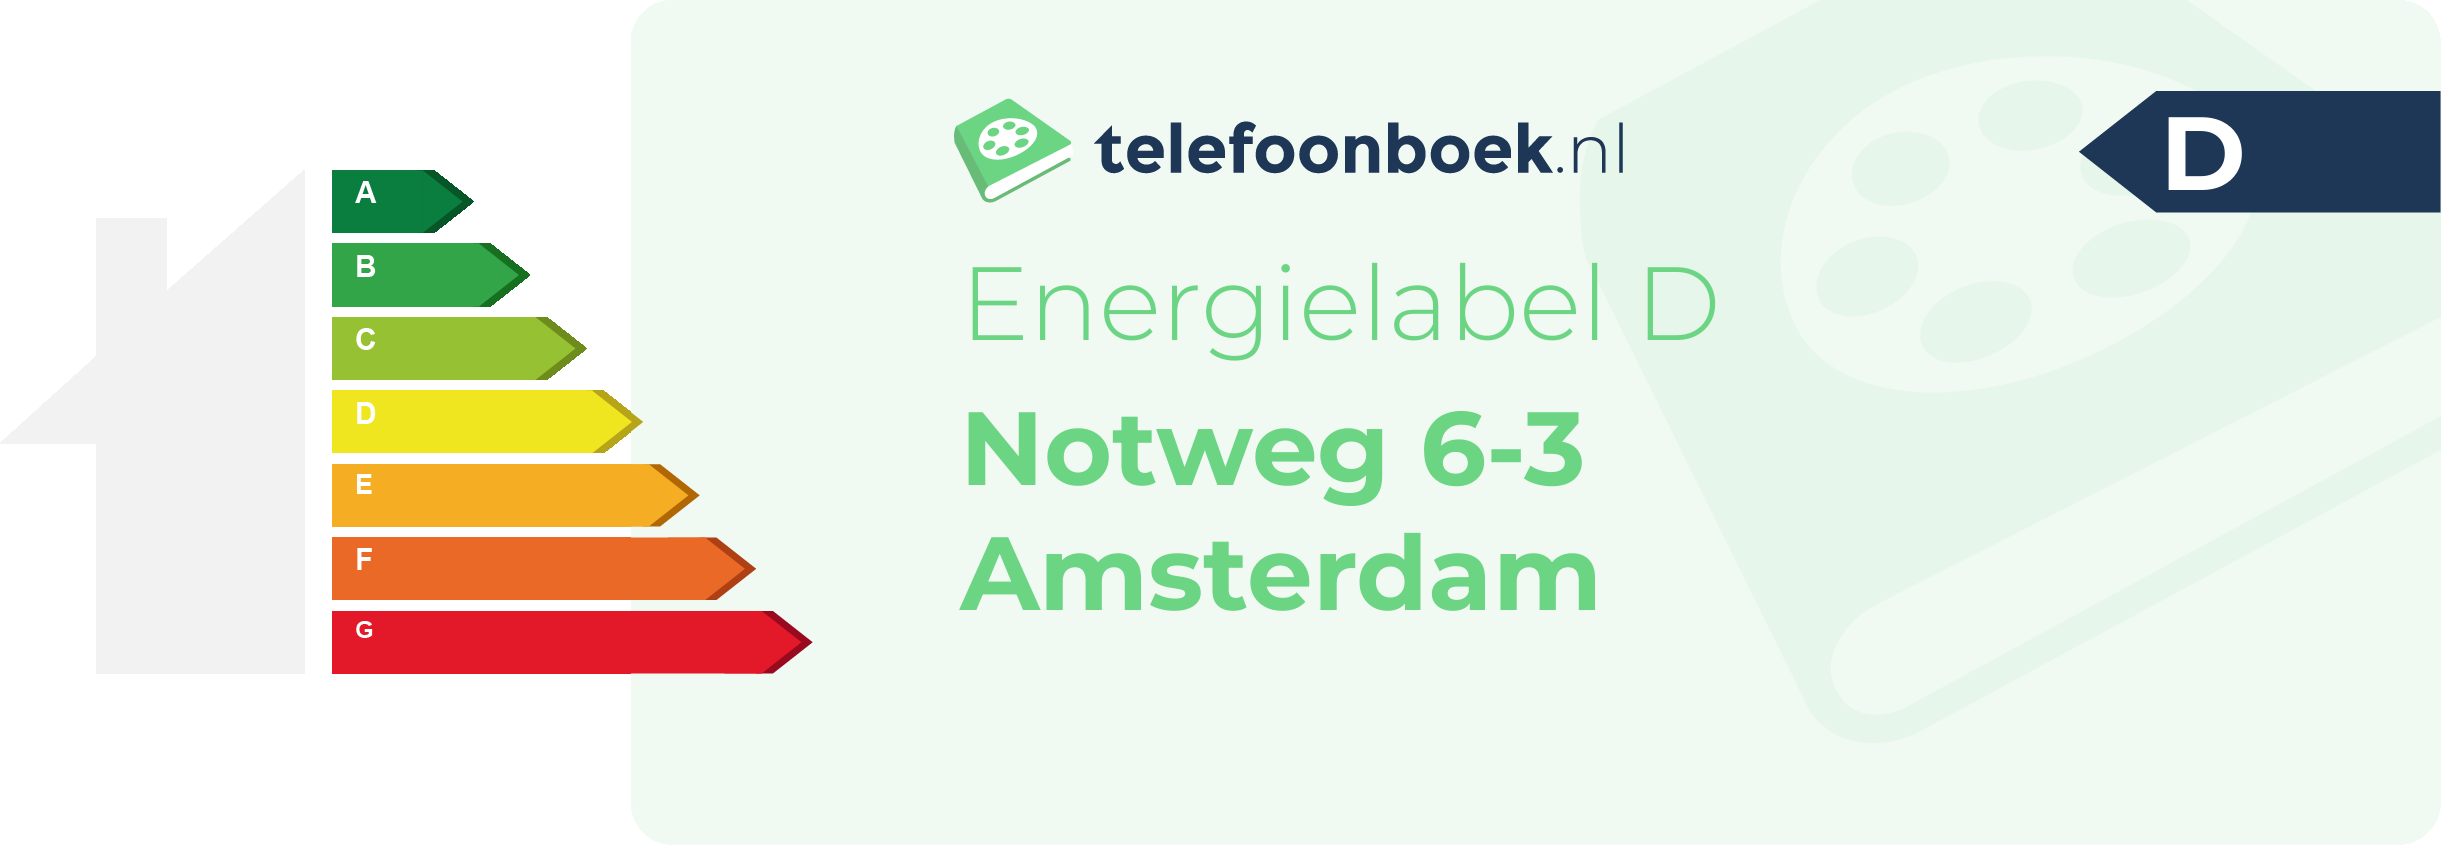 Energielabel Notweg 6-3 Amsterdam